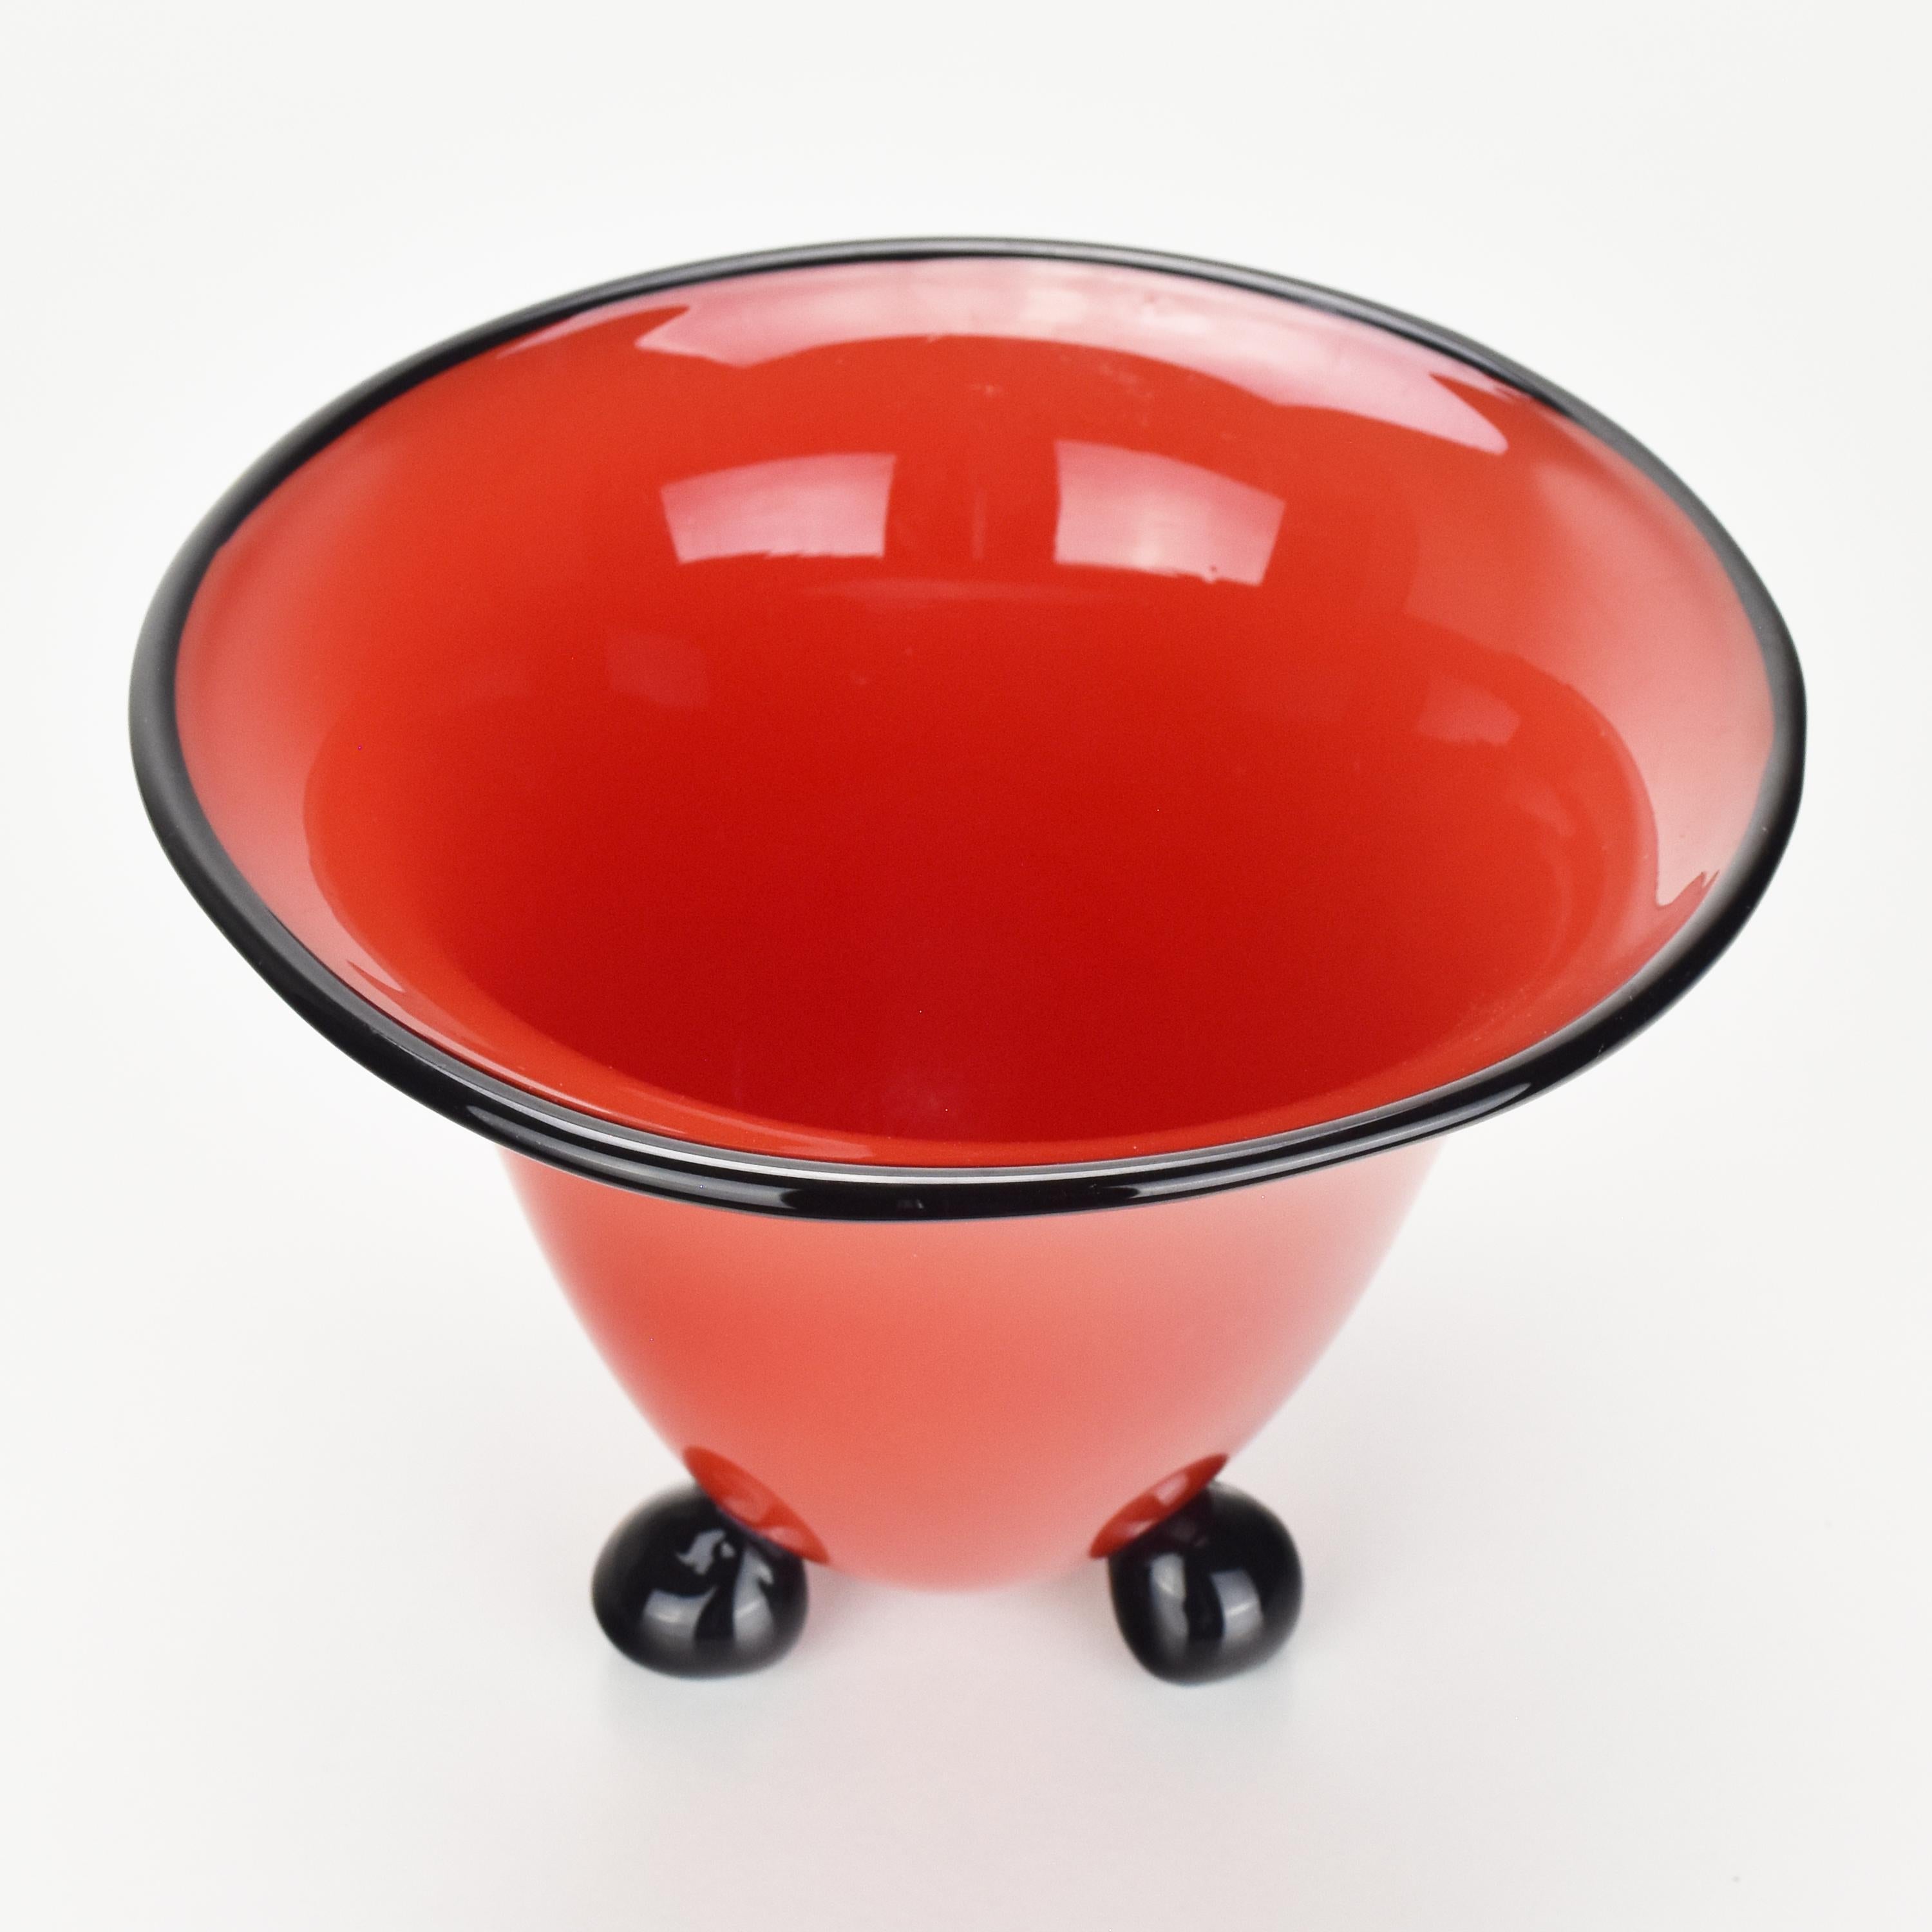 Bohemian Loetz Red Tango Glass Vase w. Black Accents by Michael Powolny For Sale 1